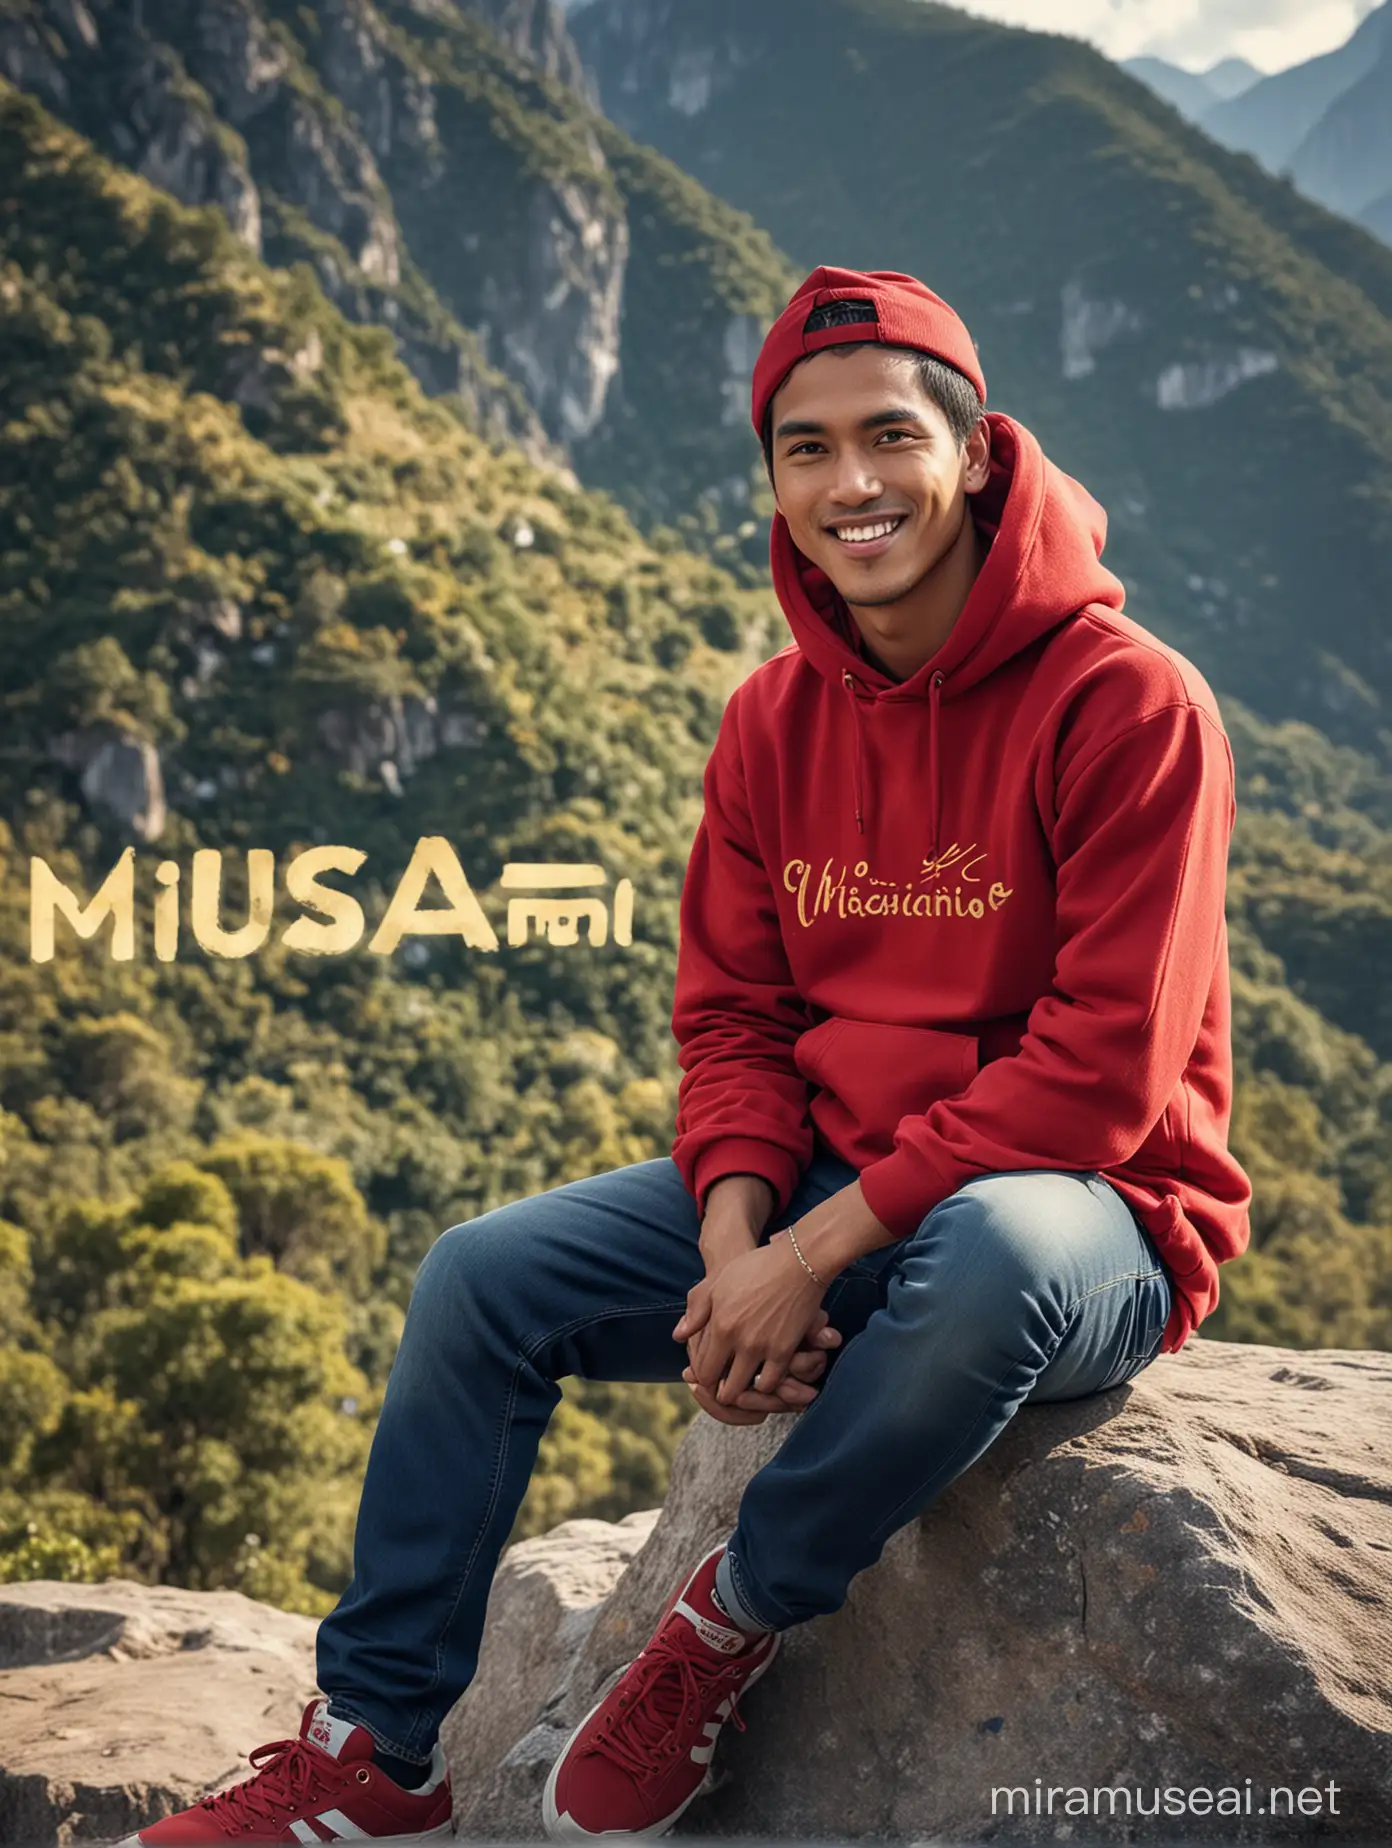 Handsome Indonesian Man Named Musafir Enjoying Mountain View in Red Hoodie